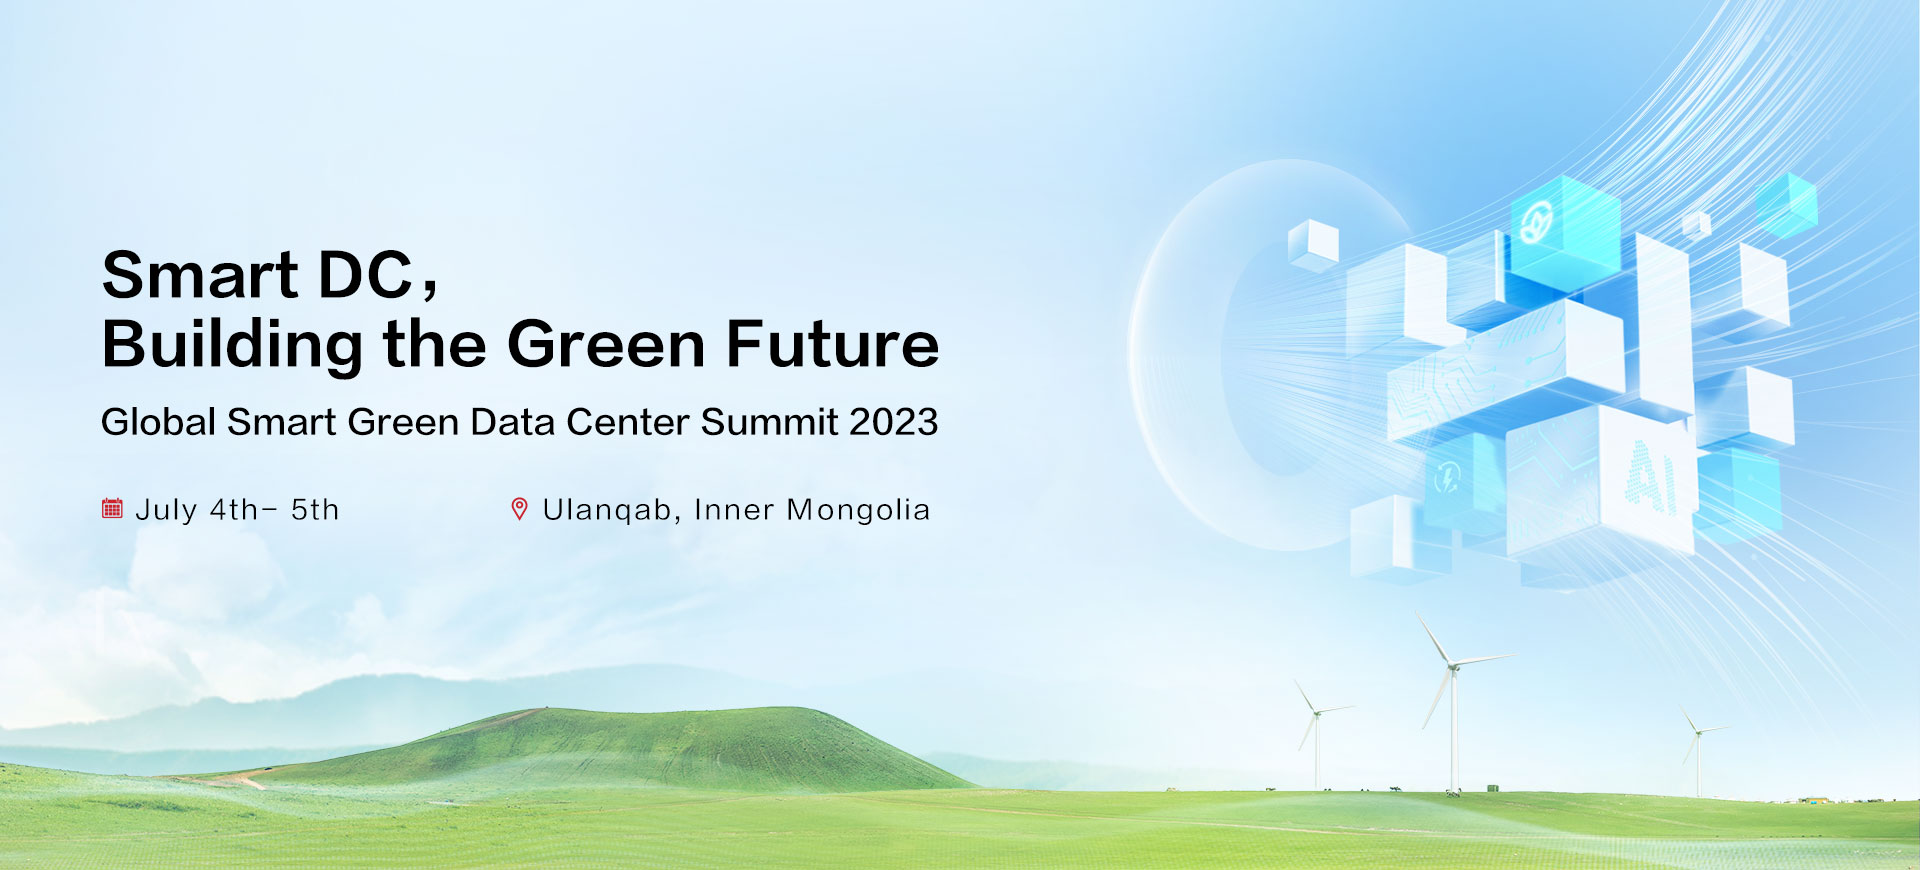 Global Smart Green Data Center Summit 2023